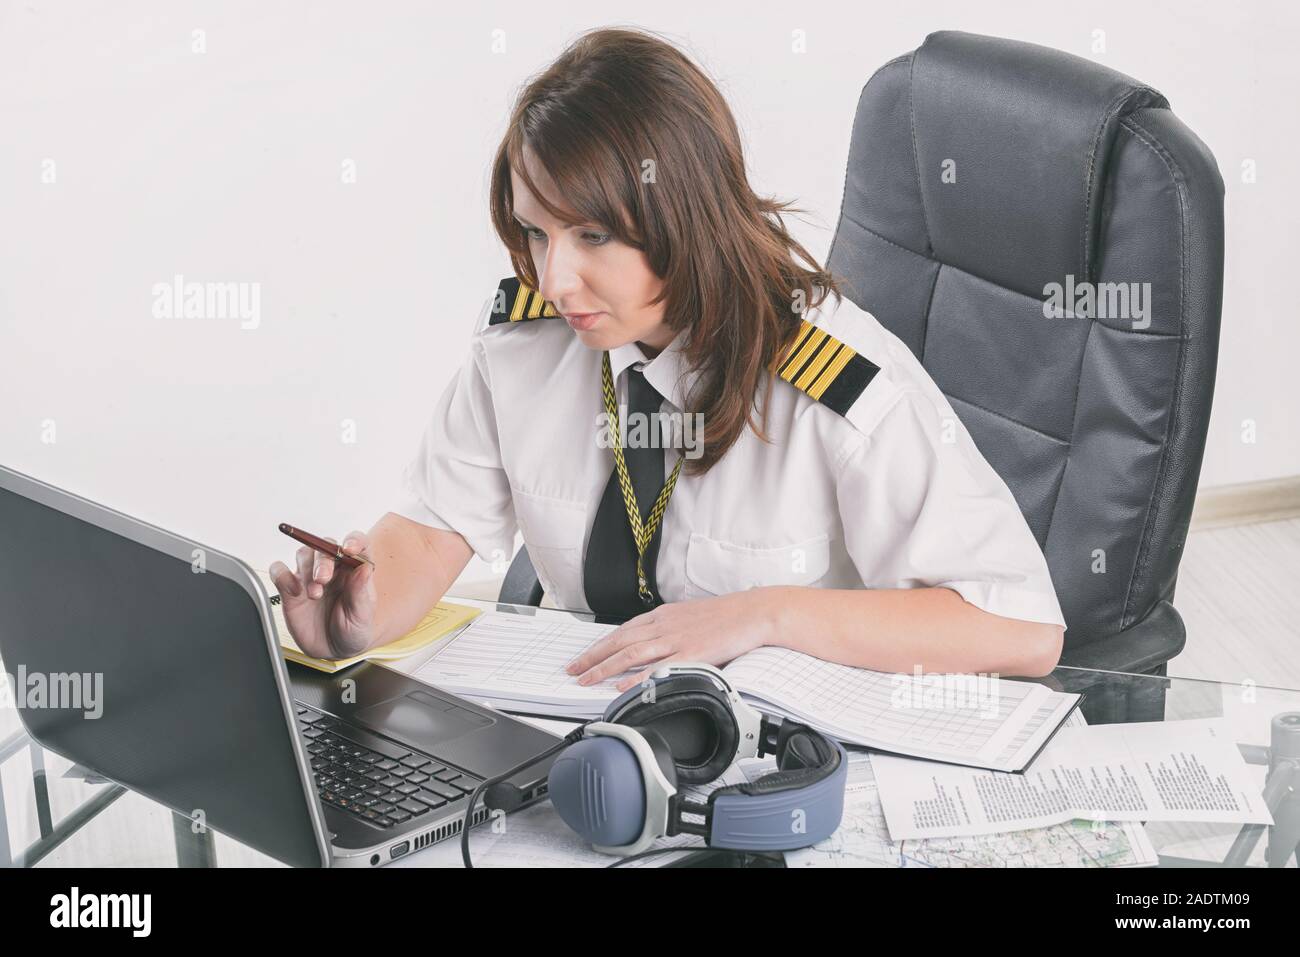 Beautiful woman pilot wearing uniform with epaulettes doing preflight briefing Stock Photo